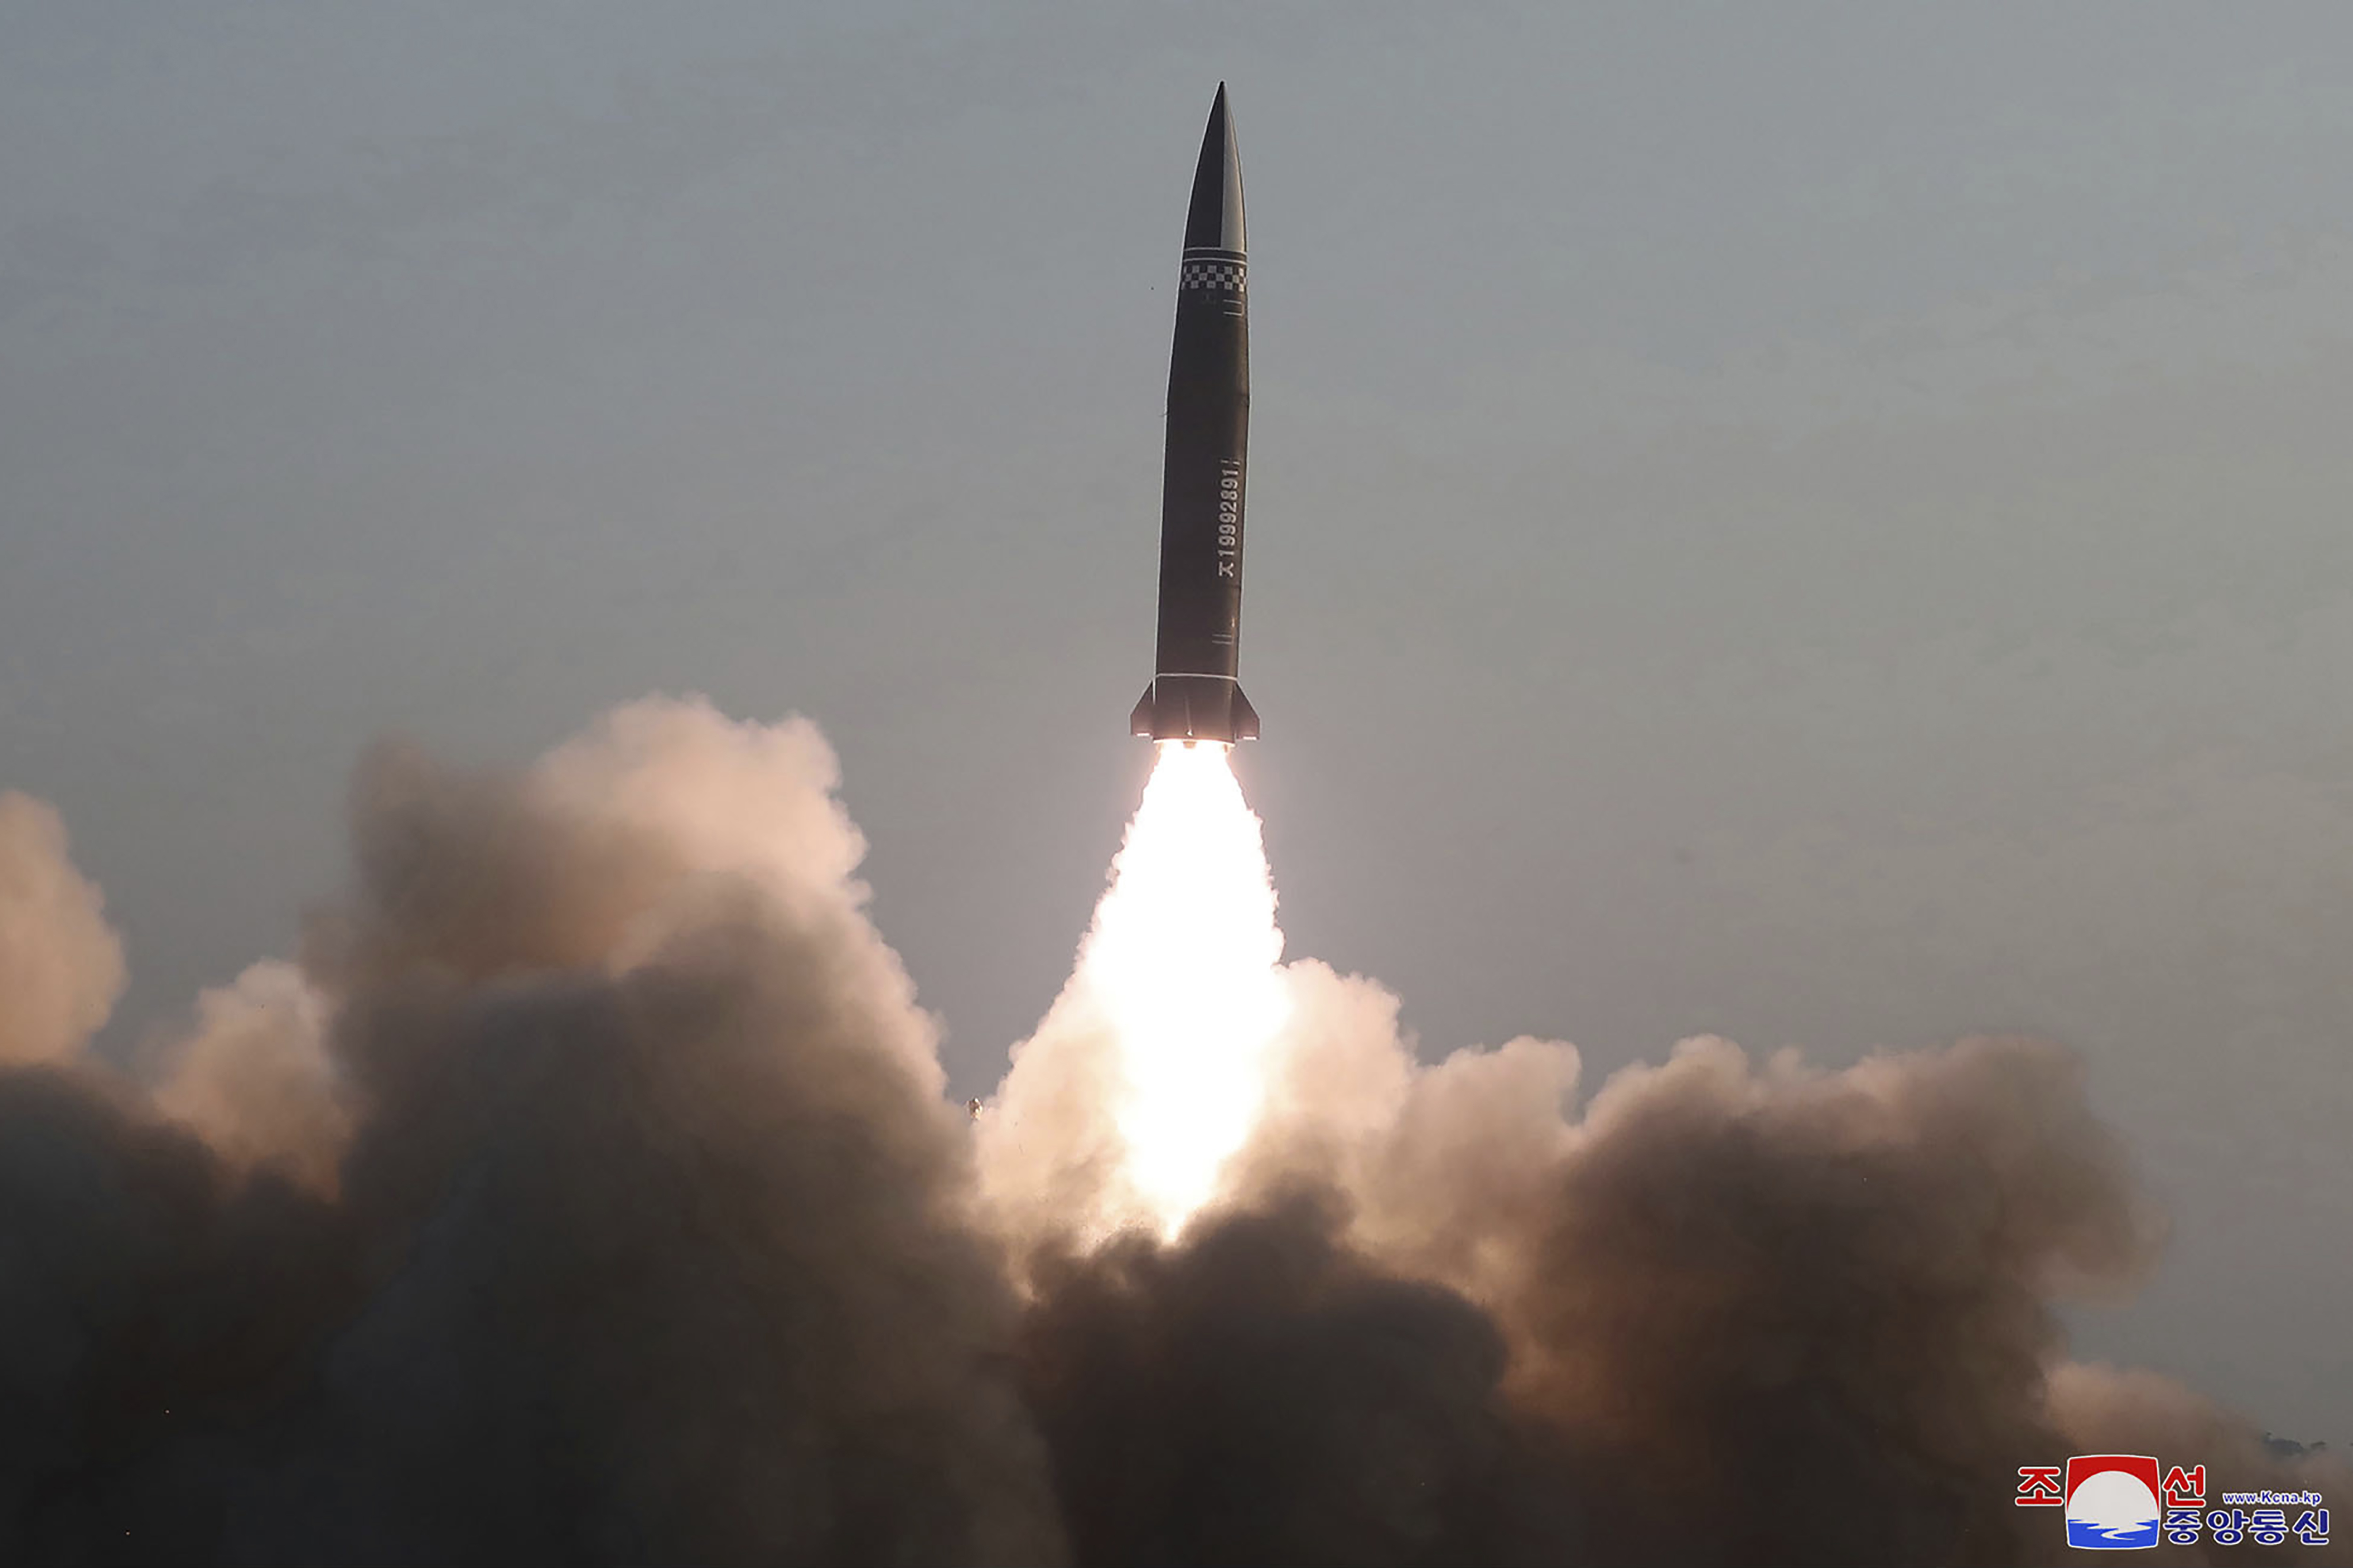 North Korea confirms missile tests as Biden warns of response The